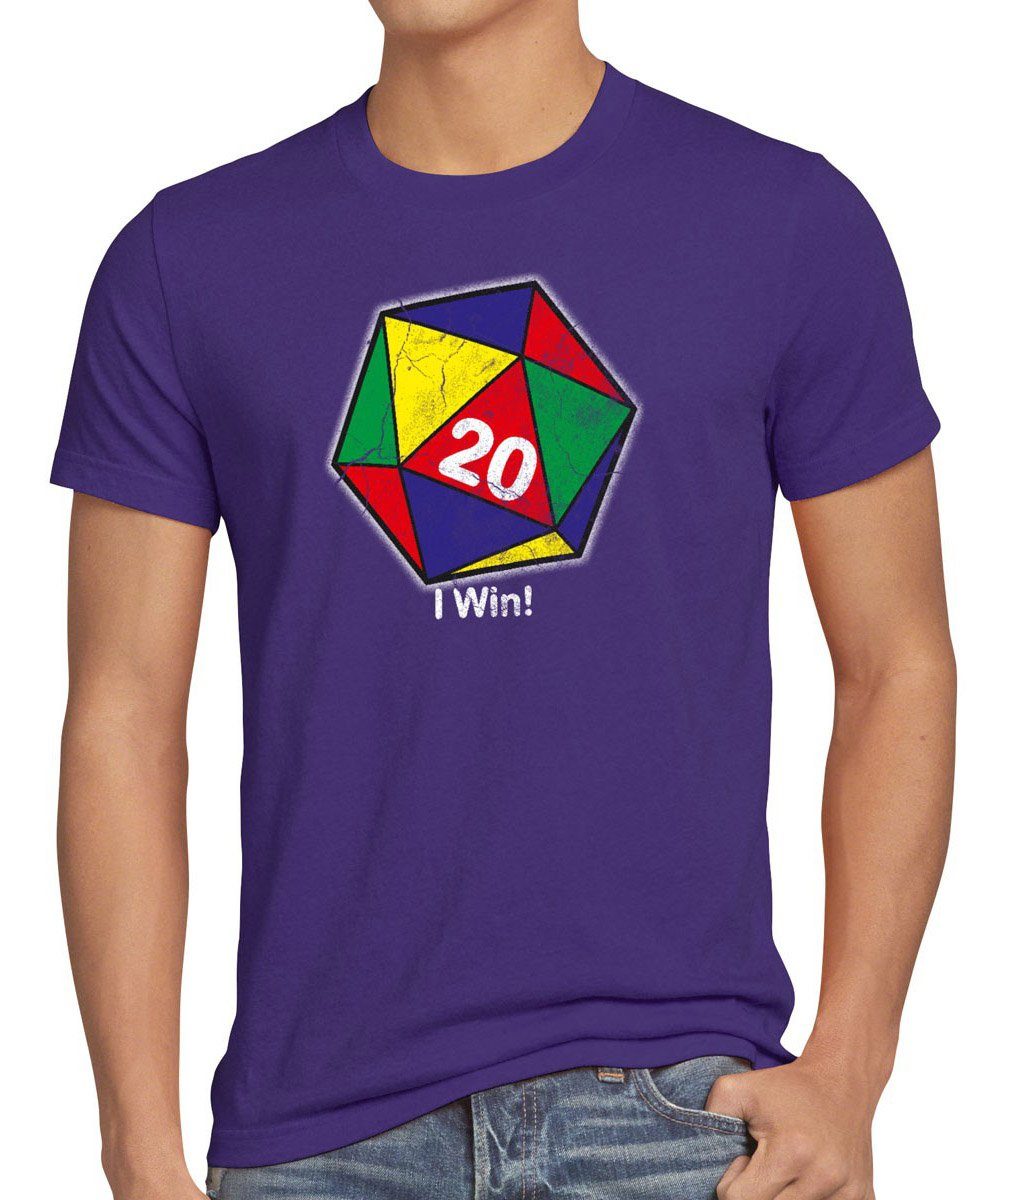 style3 Print-Shirt Herren T-Shirt Sheldon W20 Zauberwürfel big cooper theory the bang mathematik lila